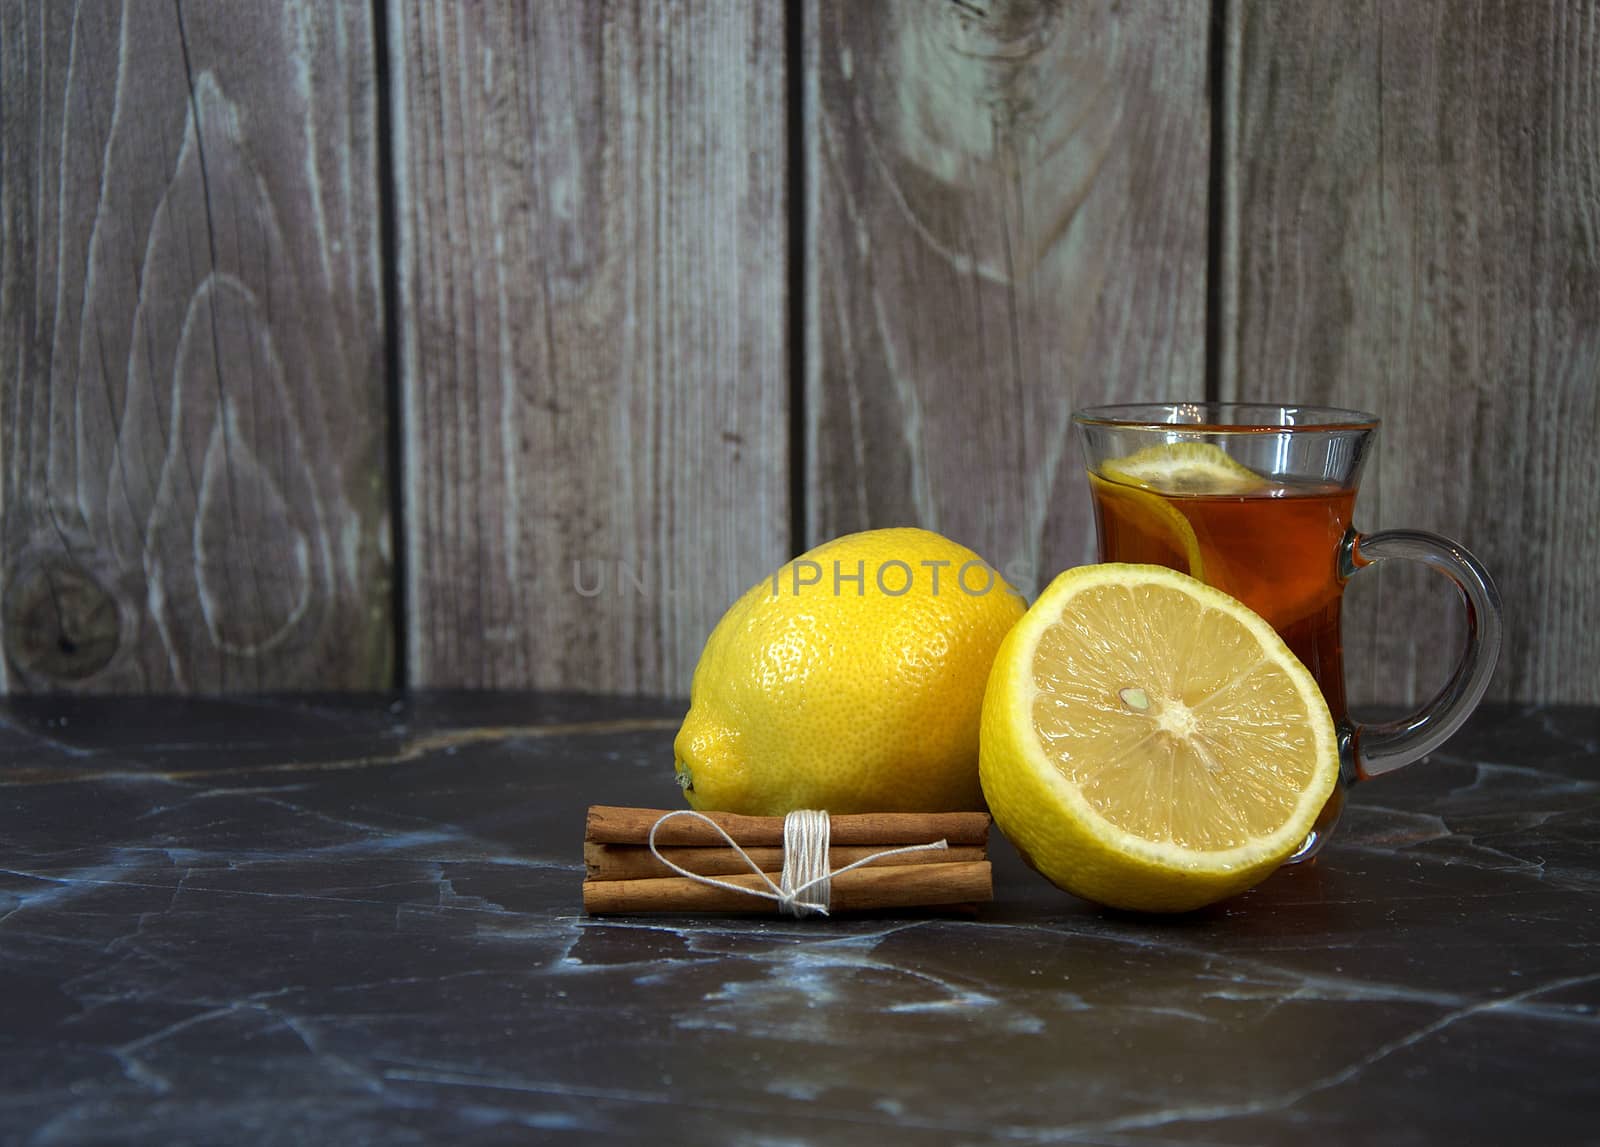 The best cold medicine, hot lemon tea and cinnamon sticks. Close-up.